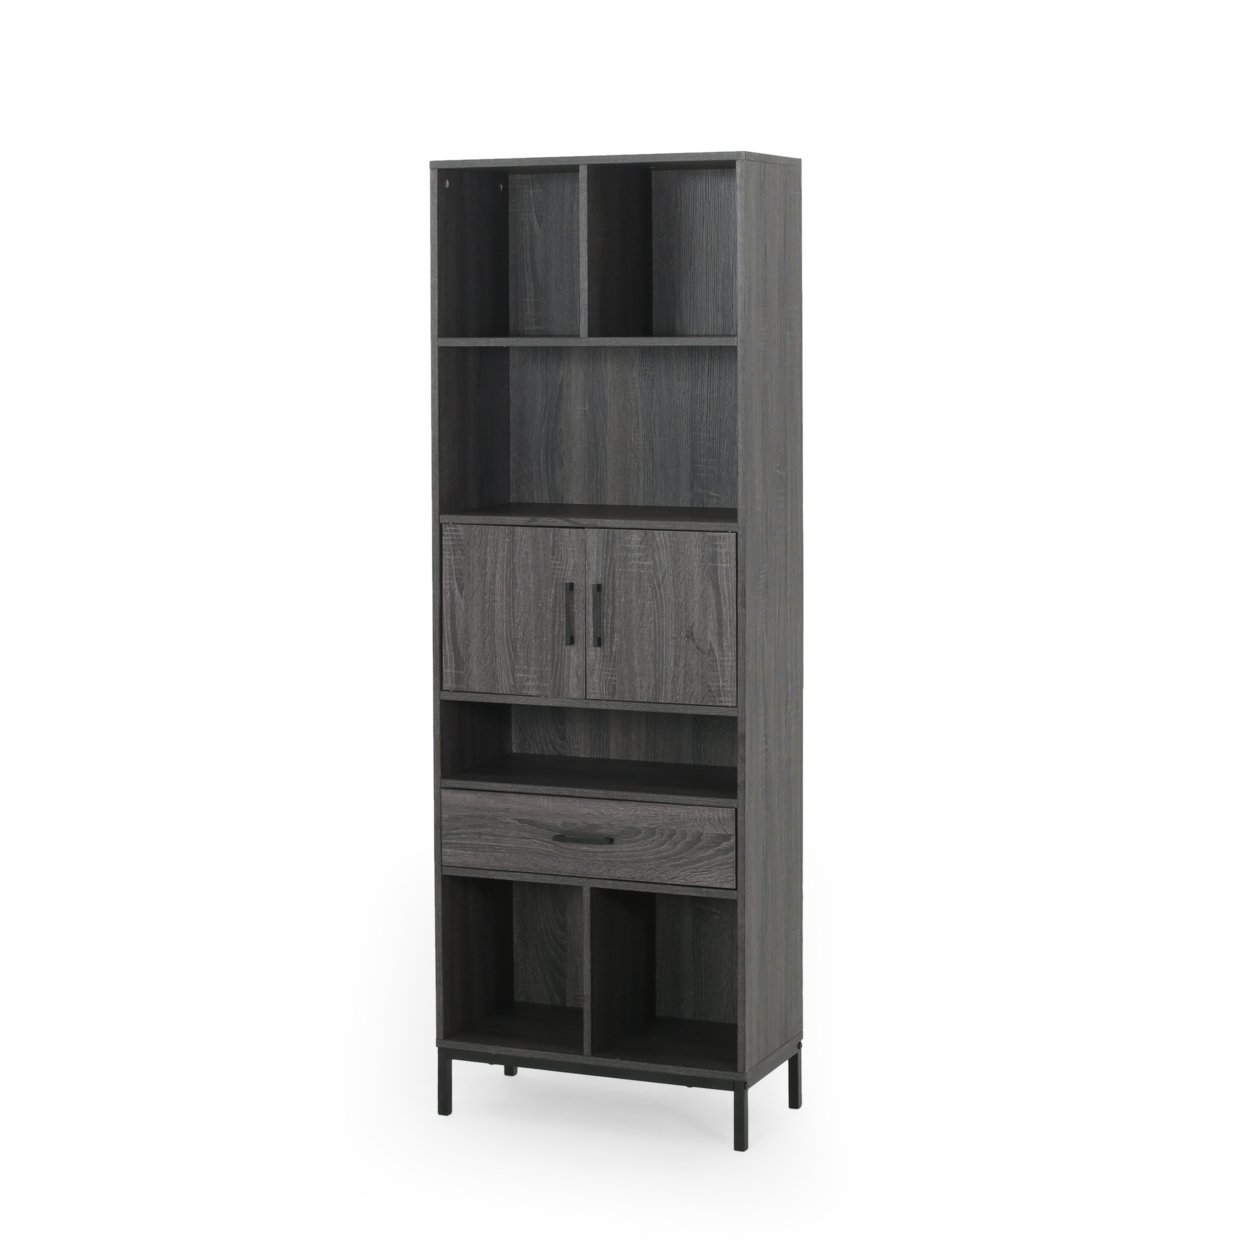 Maureen Contemporary Faux Wood Cube Unit Bookcase - Dark Gray + Black